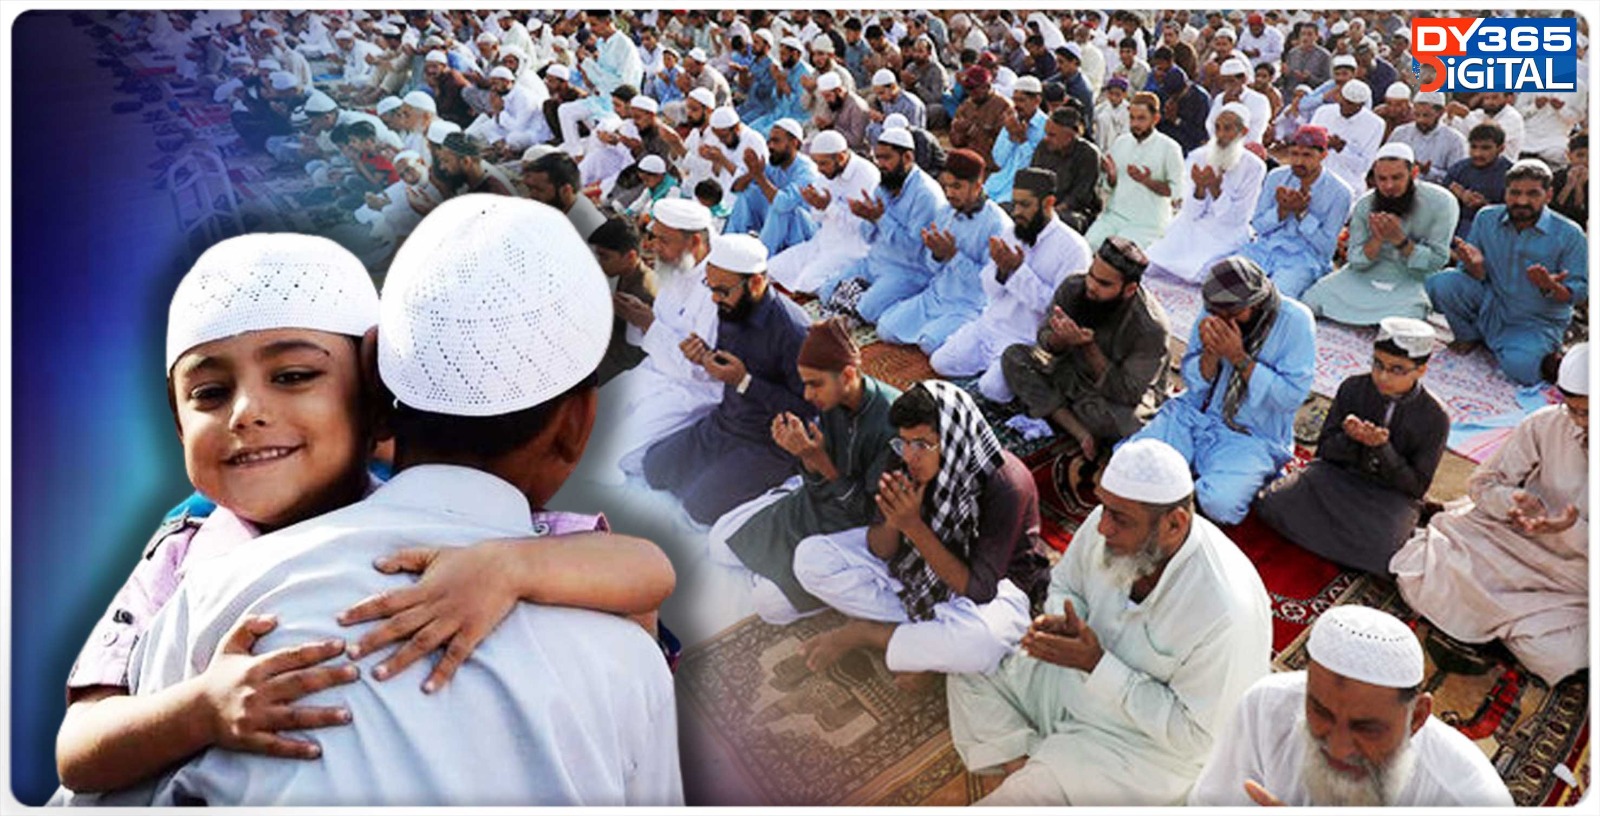 mass-gatherings-at-mosques-for-eid-ul-fitr-namaz-mark-festive-celebrations-